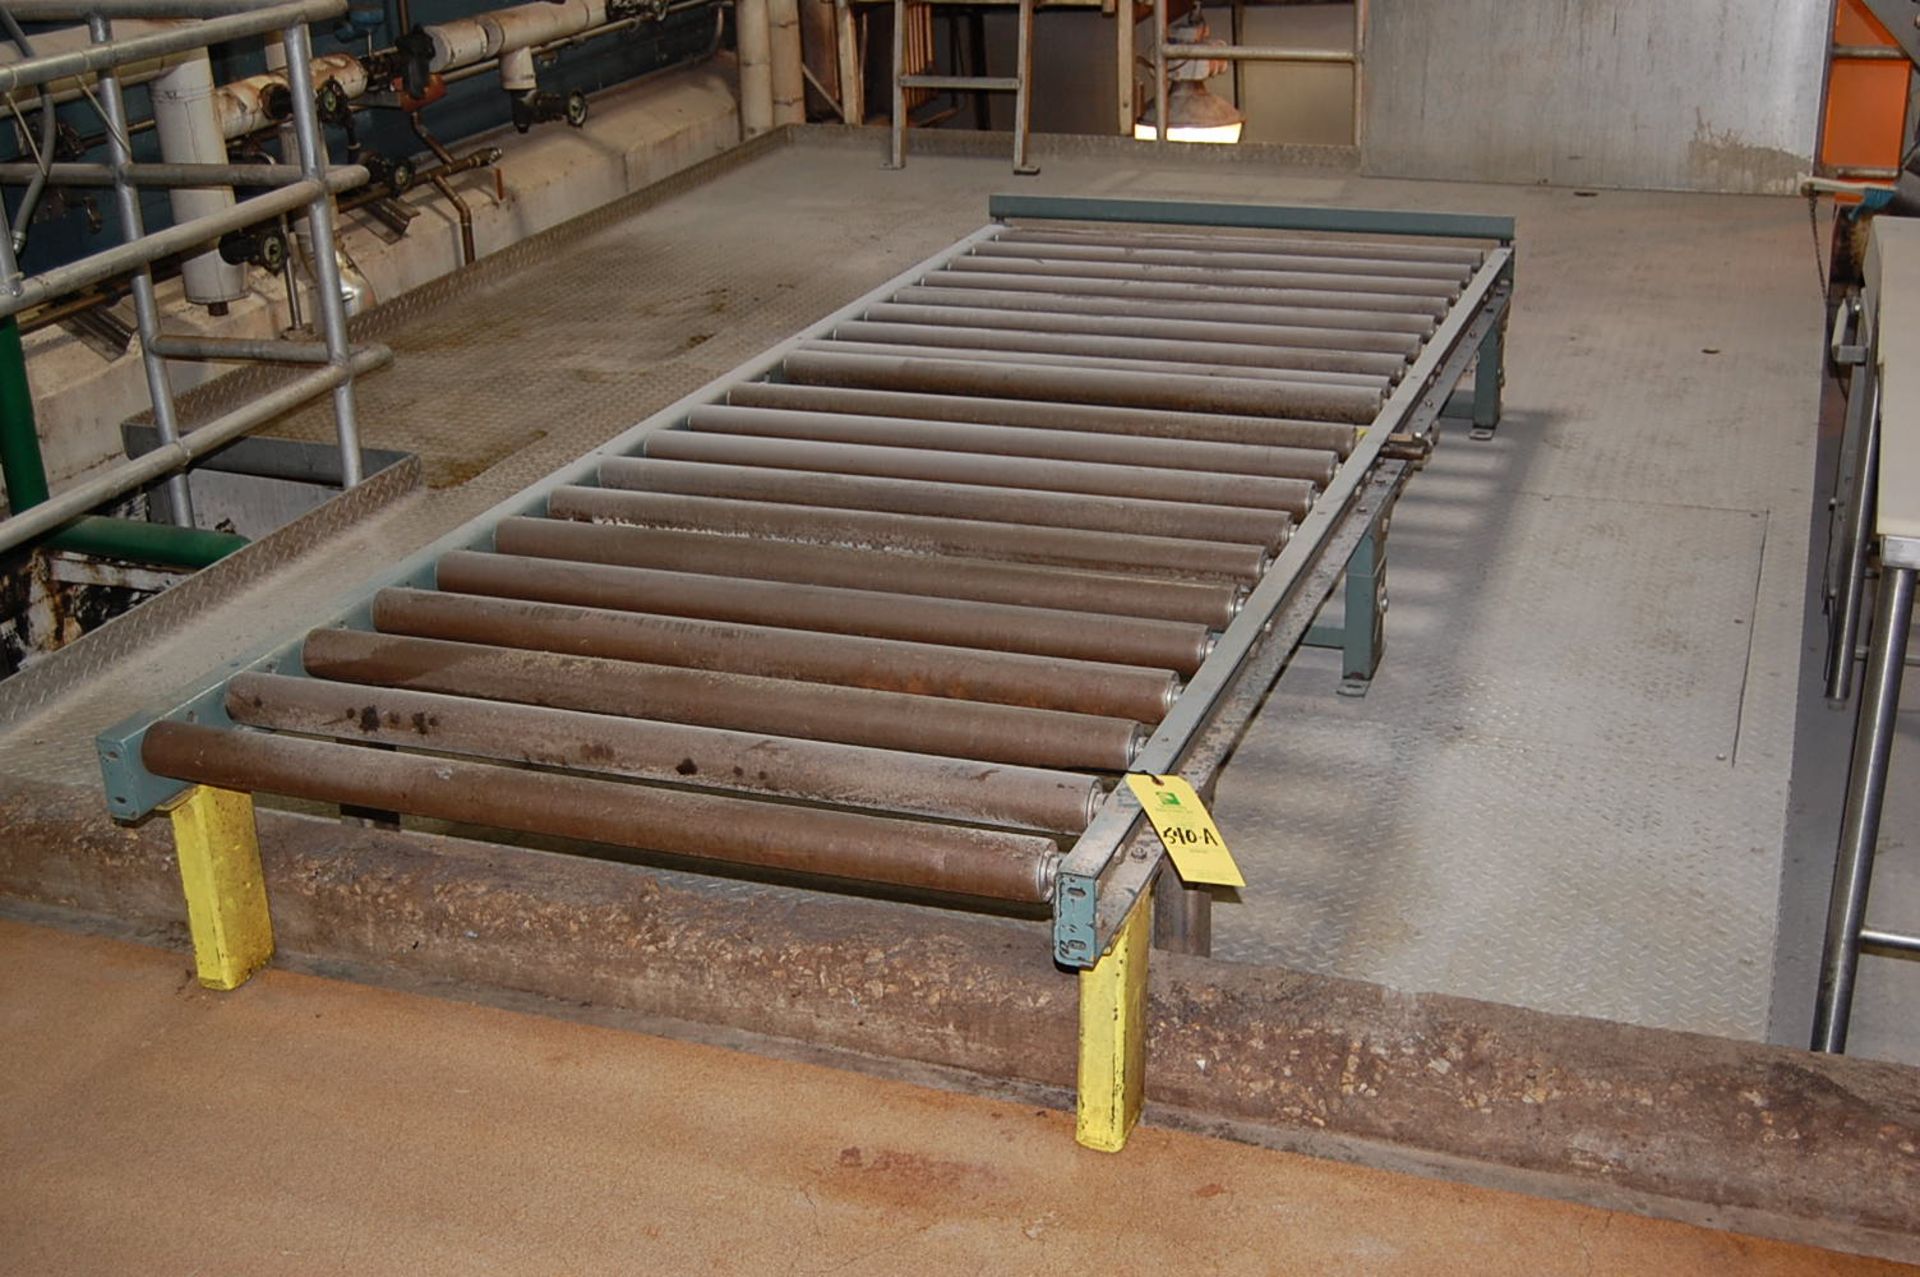 Hytrol Roller Conveyor, 10 Ft. Section